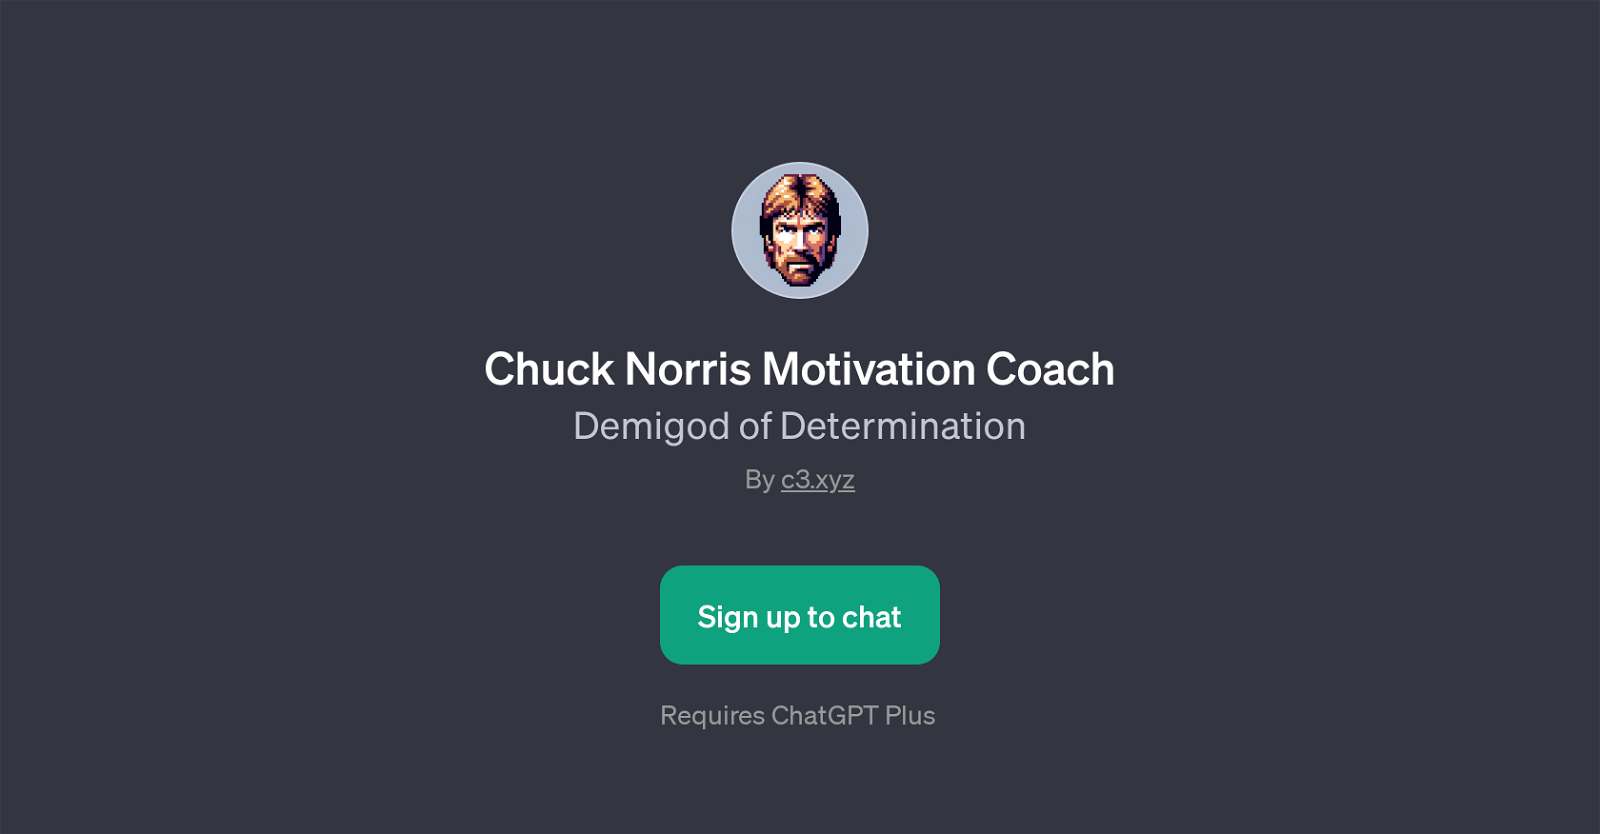 Chuck Norris Motivation Coach website